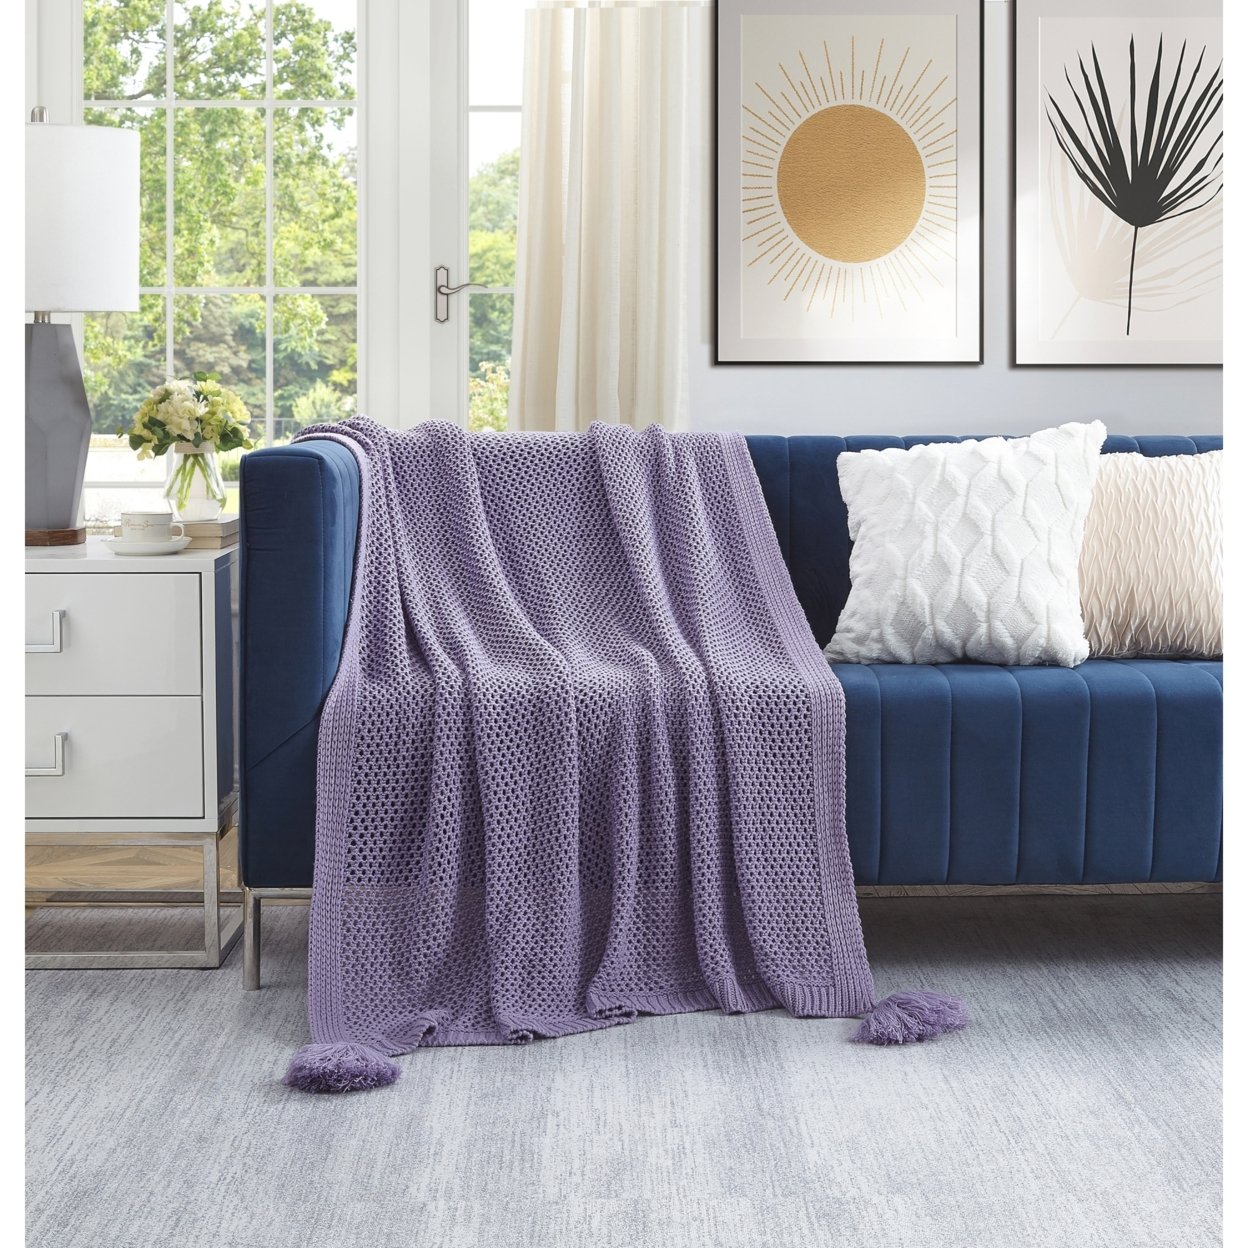 Maryjane Throw-Wool-like-4 Corner Tassel-Cozy - Purple